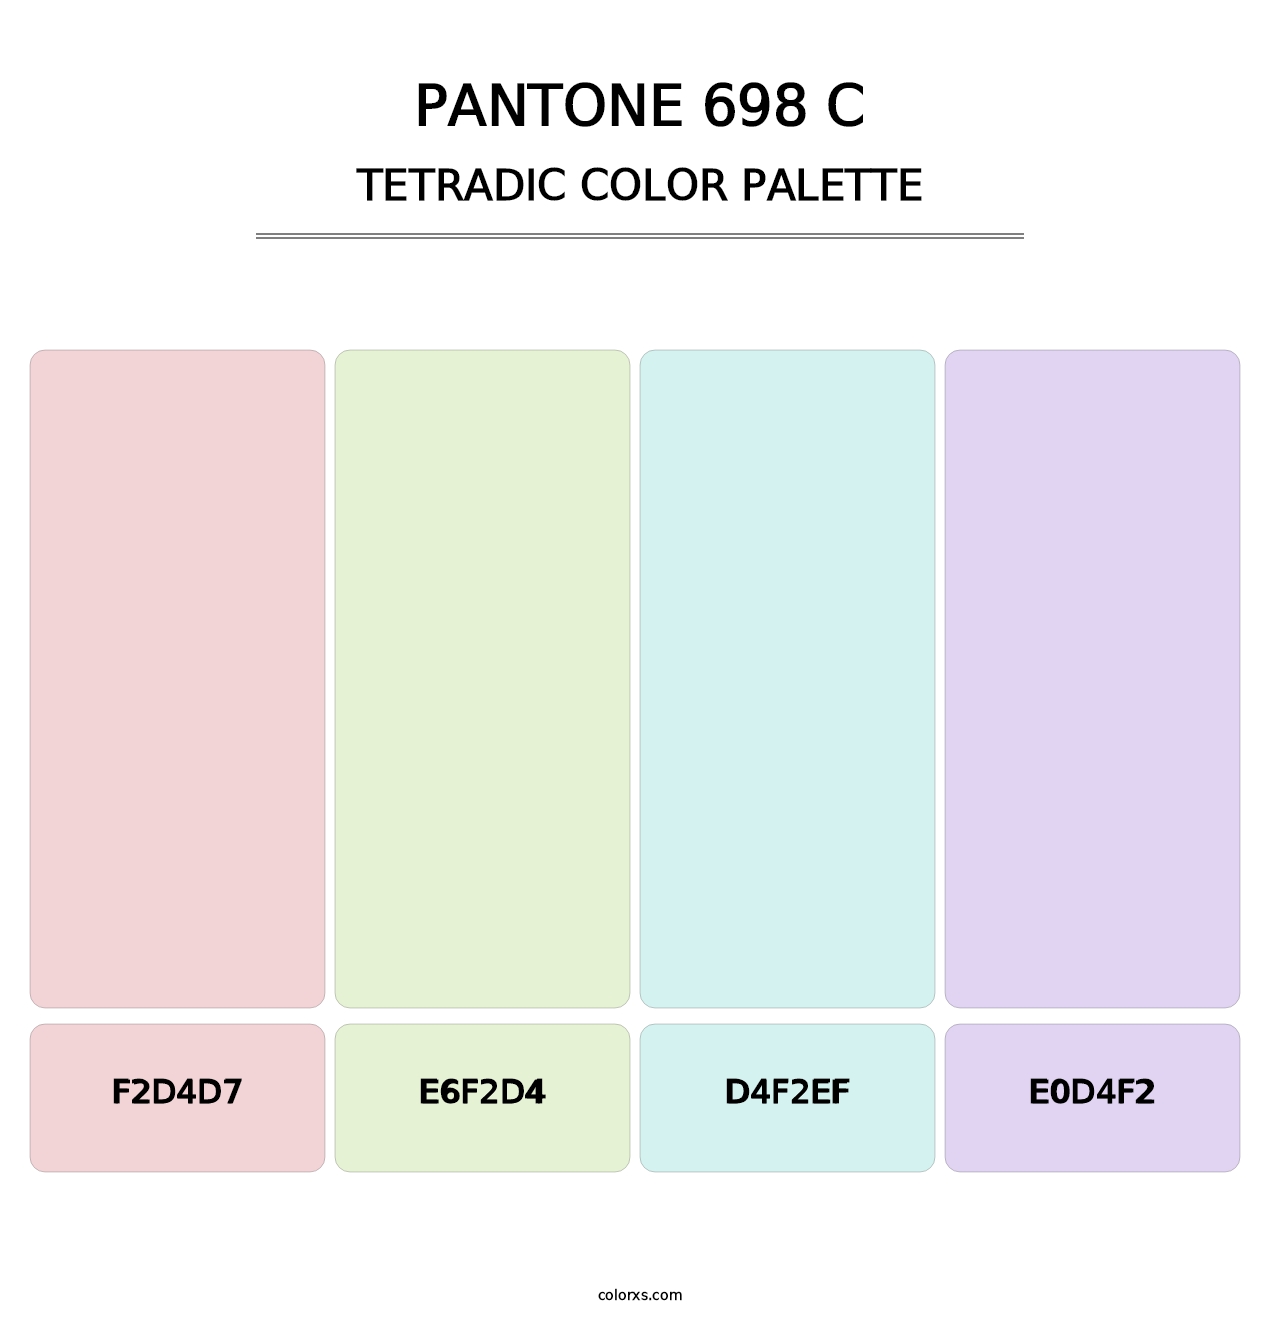 PANTONE 698 C - Tetradic Color Palette